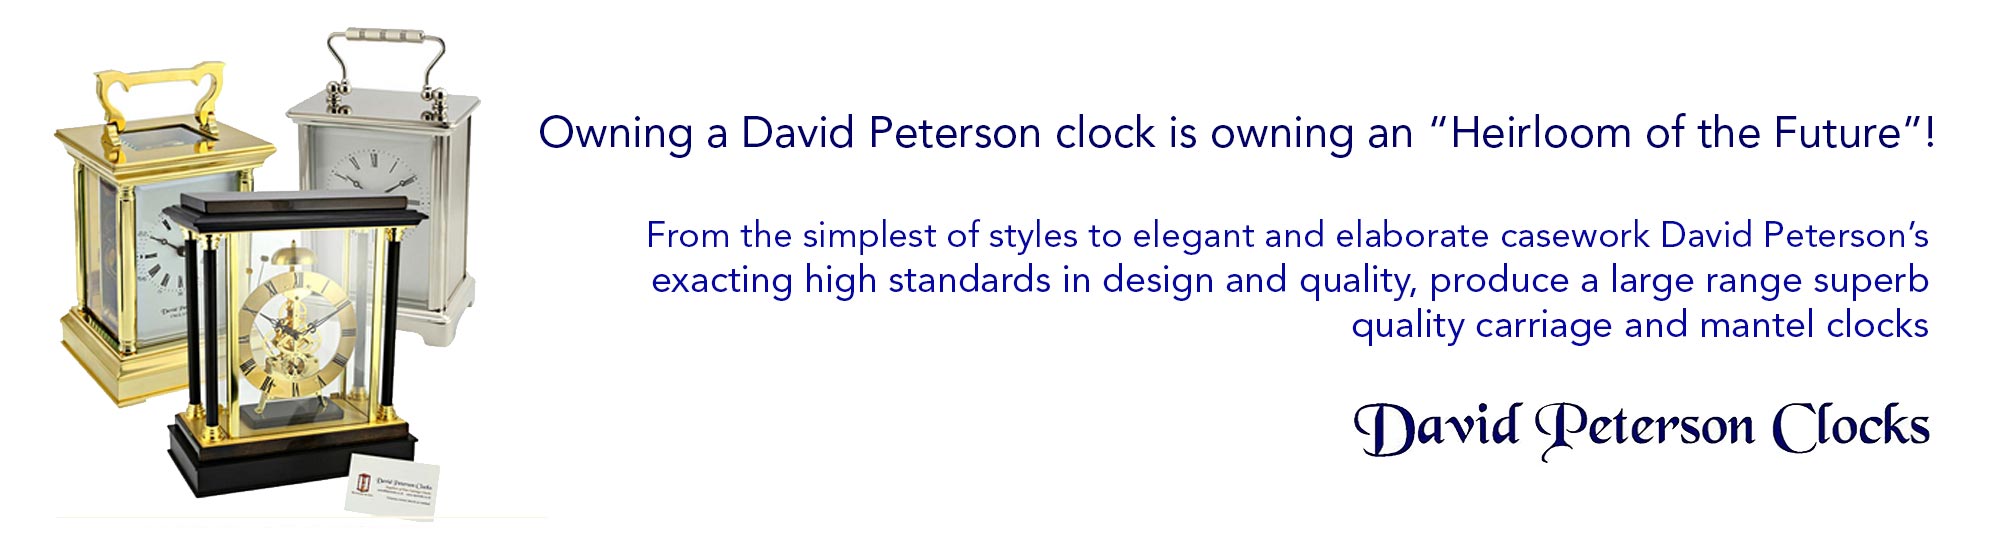 David-Peterson-Clocks